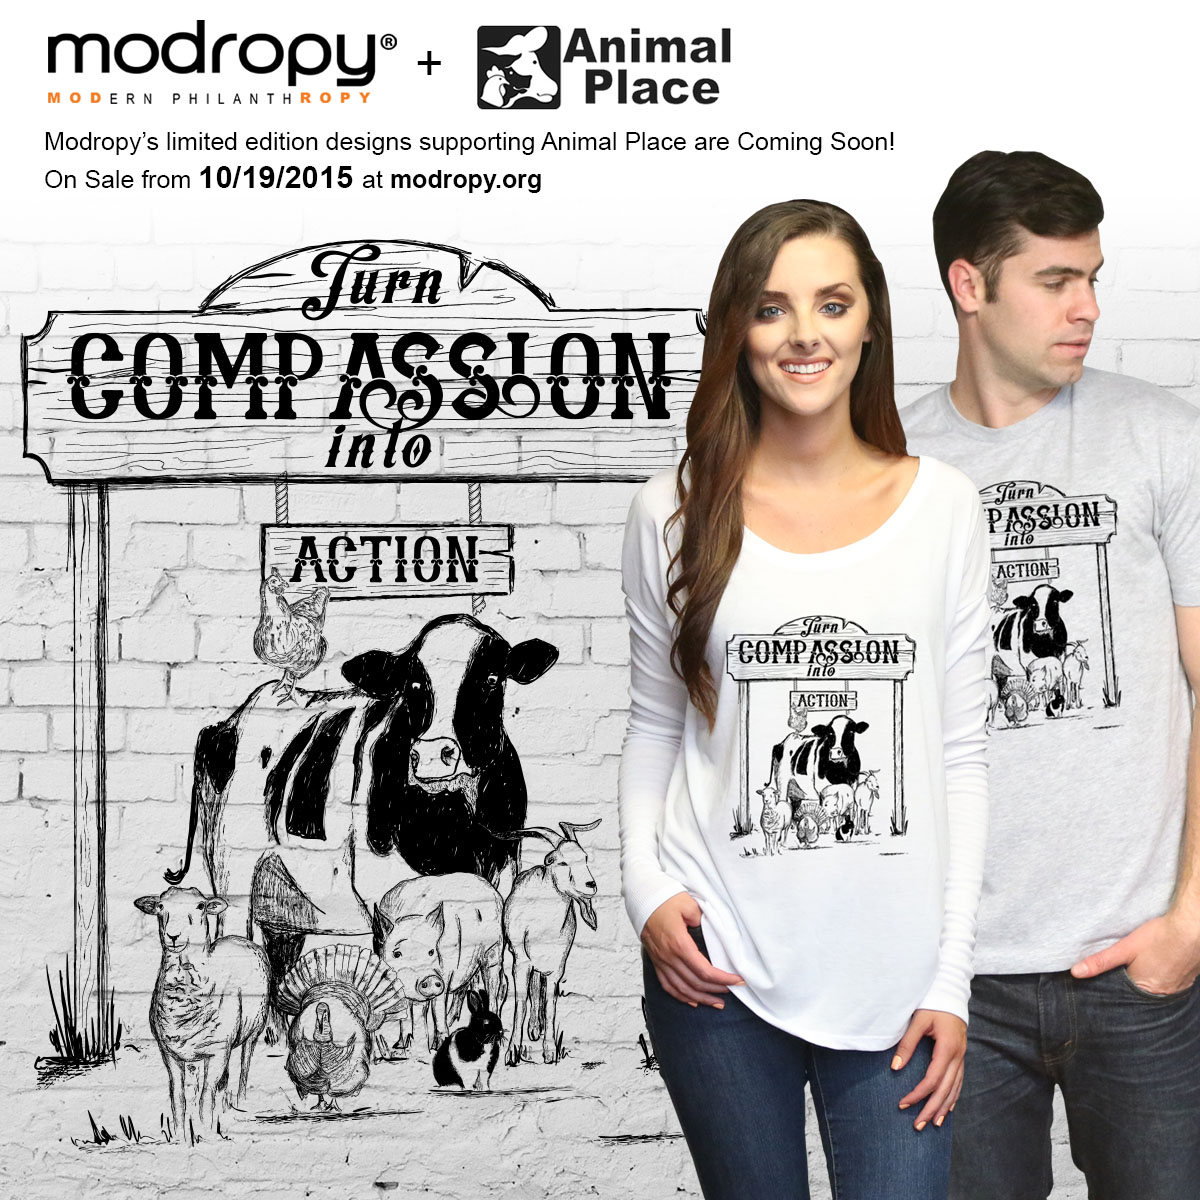 Compassion-Modropy - Animal Place campaign 10-19-2015 - 1